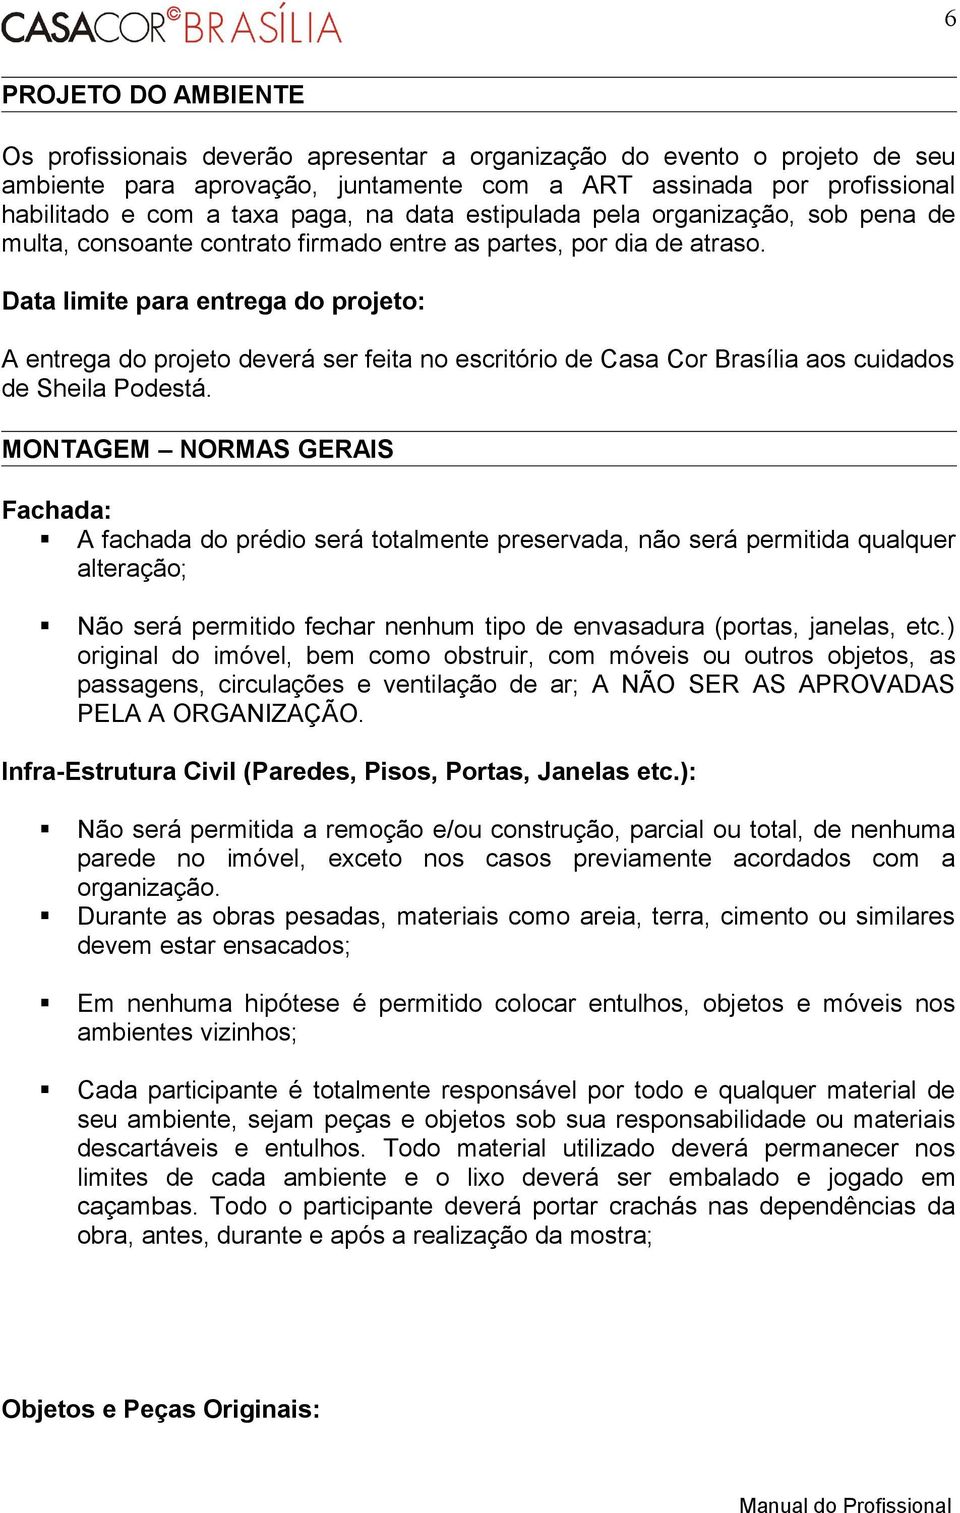 Data limite para entrega do projeto: A entrega do projeto deverá ser feita no escritório de Casa Cor Brasília aos cuidados de Sheila Podestá.